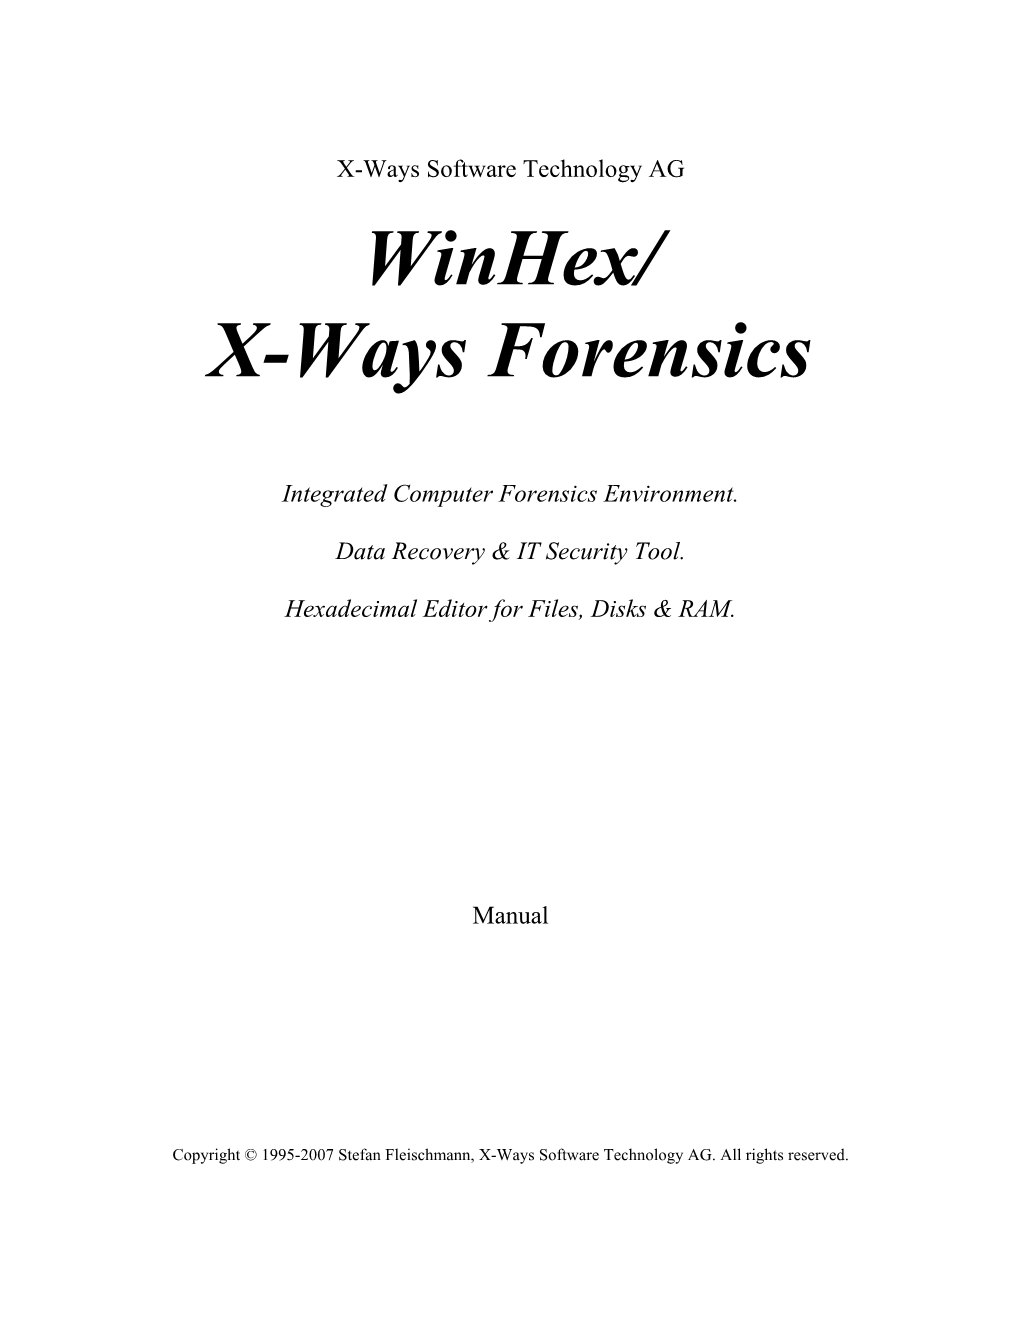 Winhex Manual